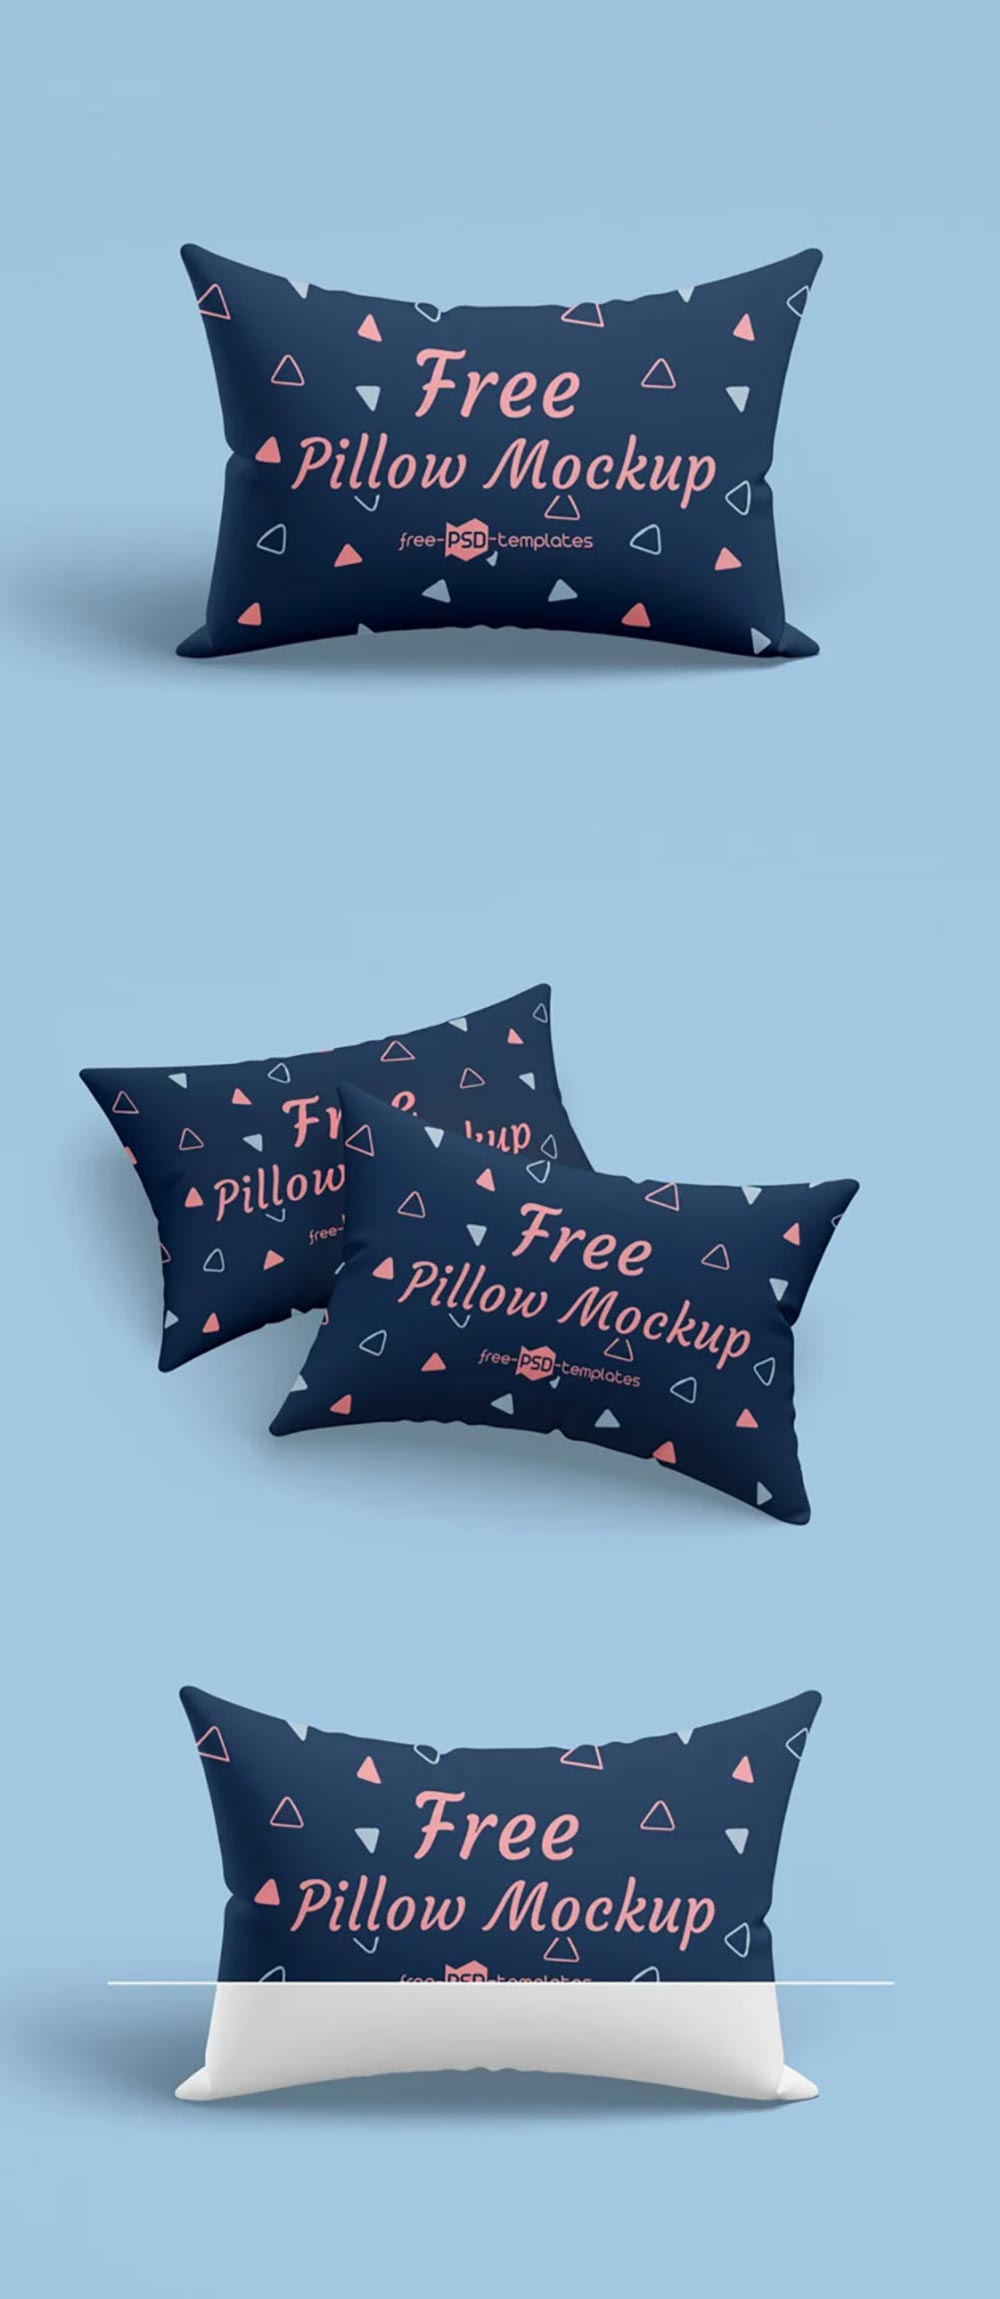 Pillows Mockup Template